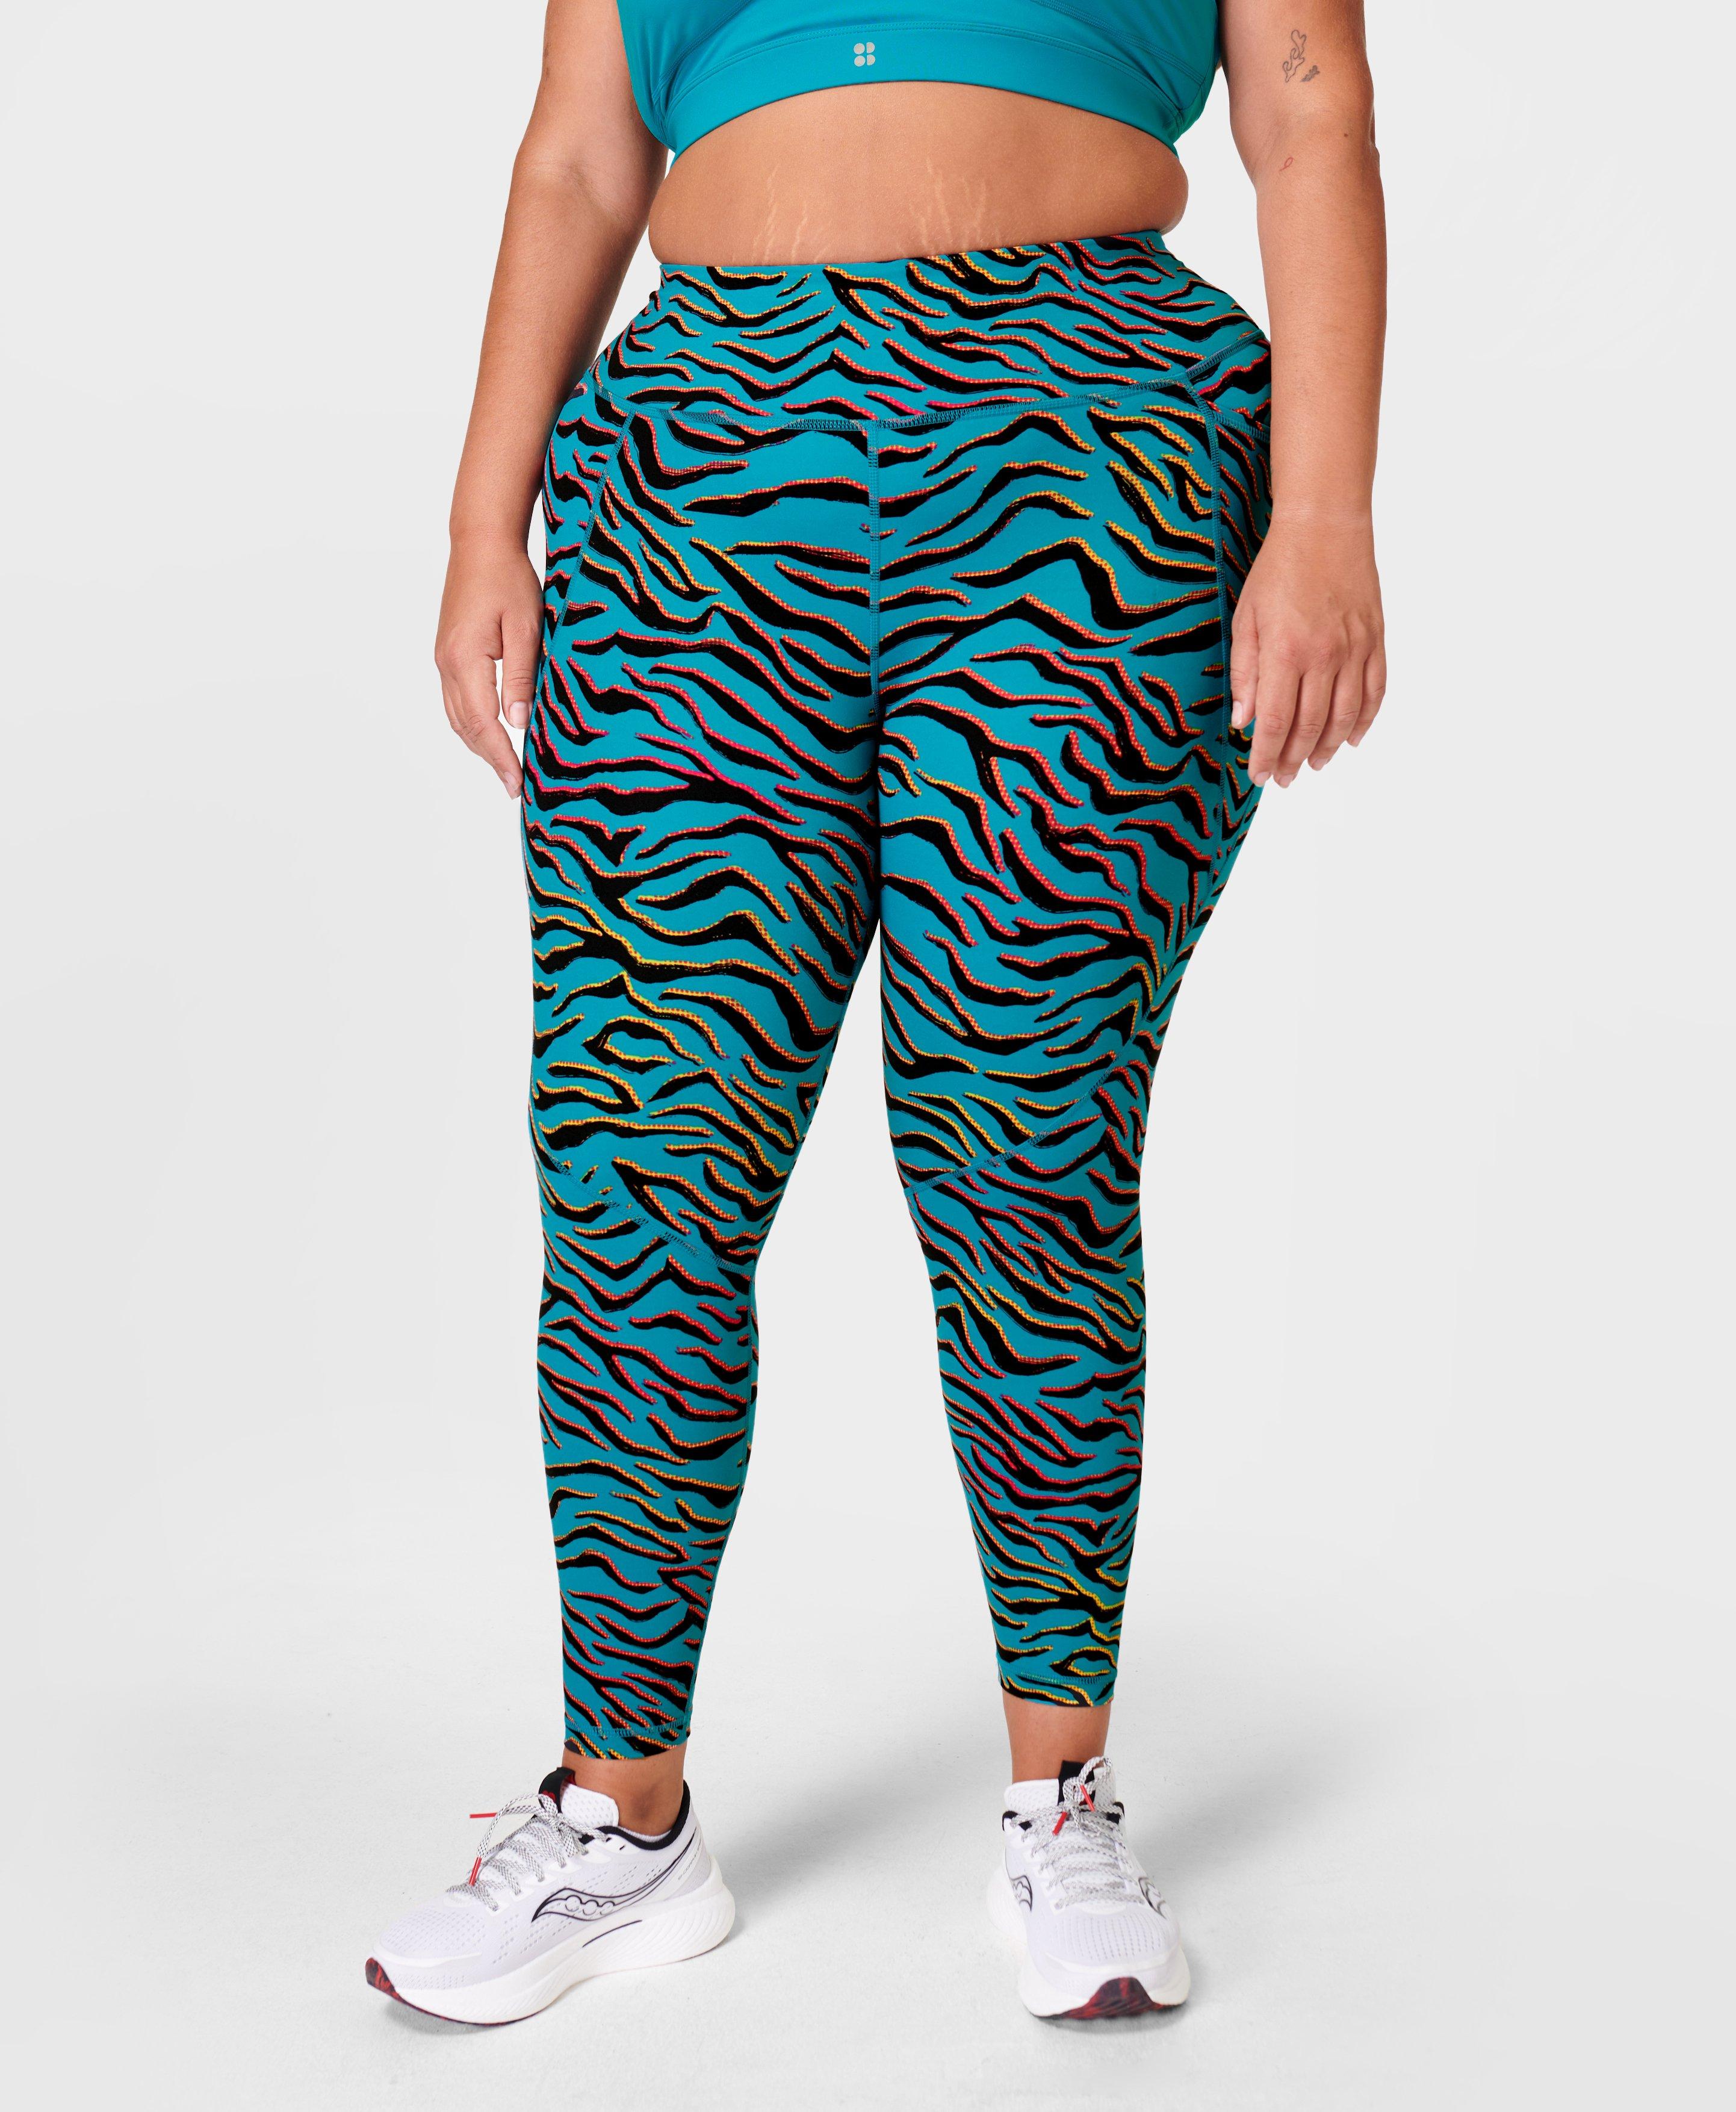 Power 7/8 Workout Leggings - Blue Gradient Tiger Print